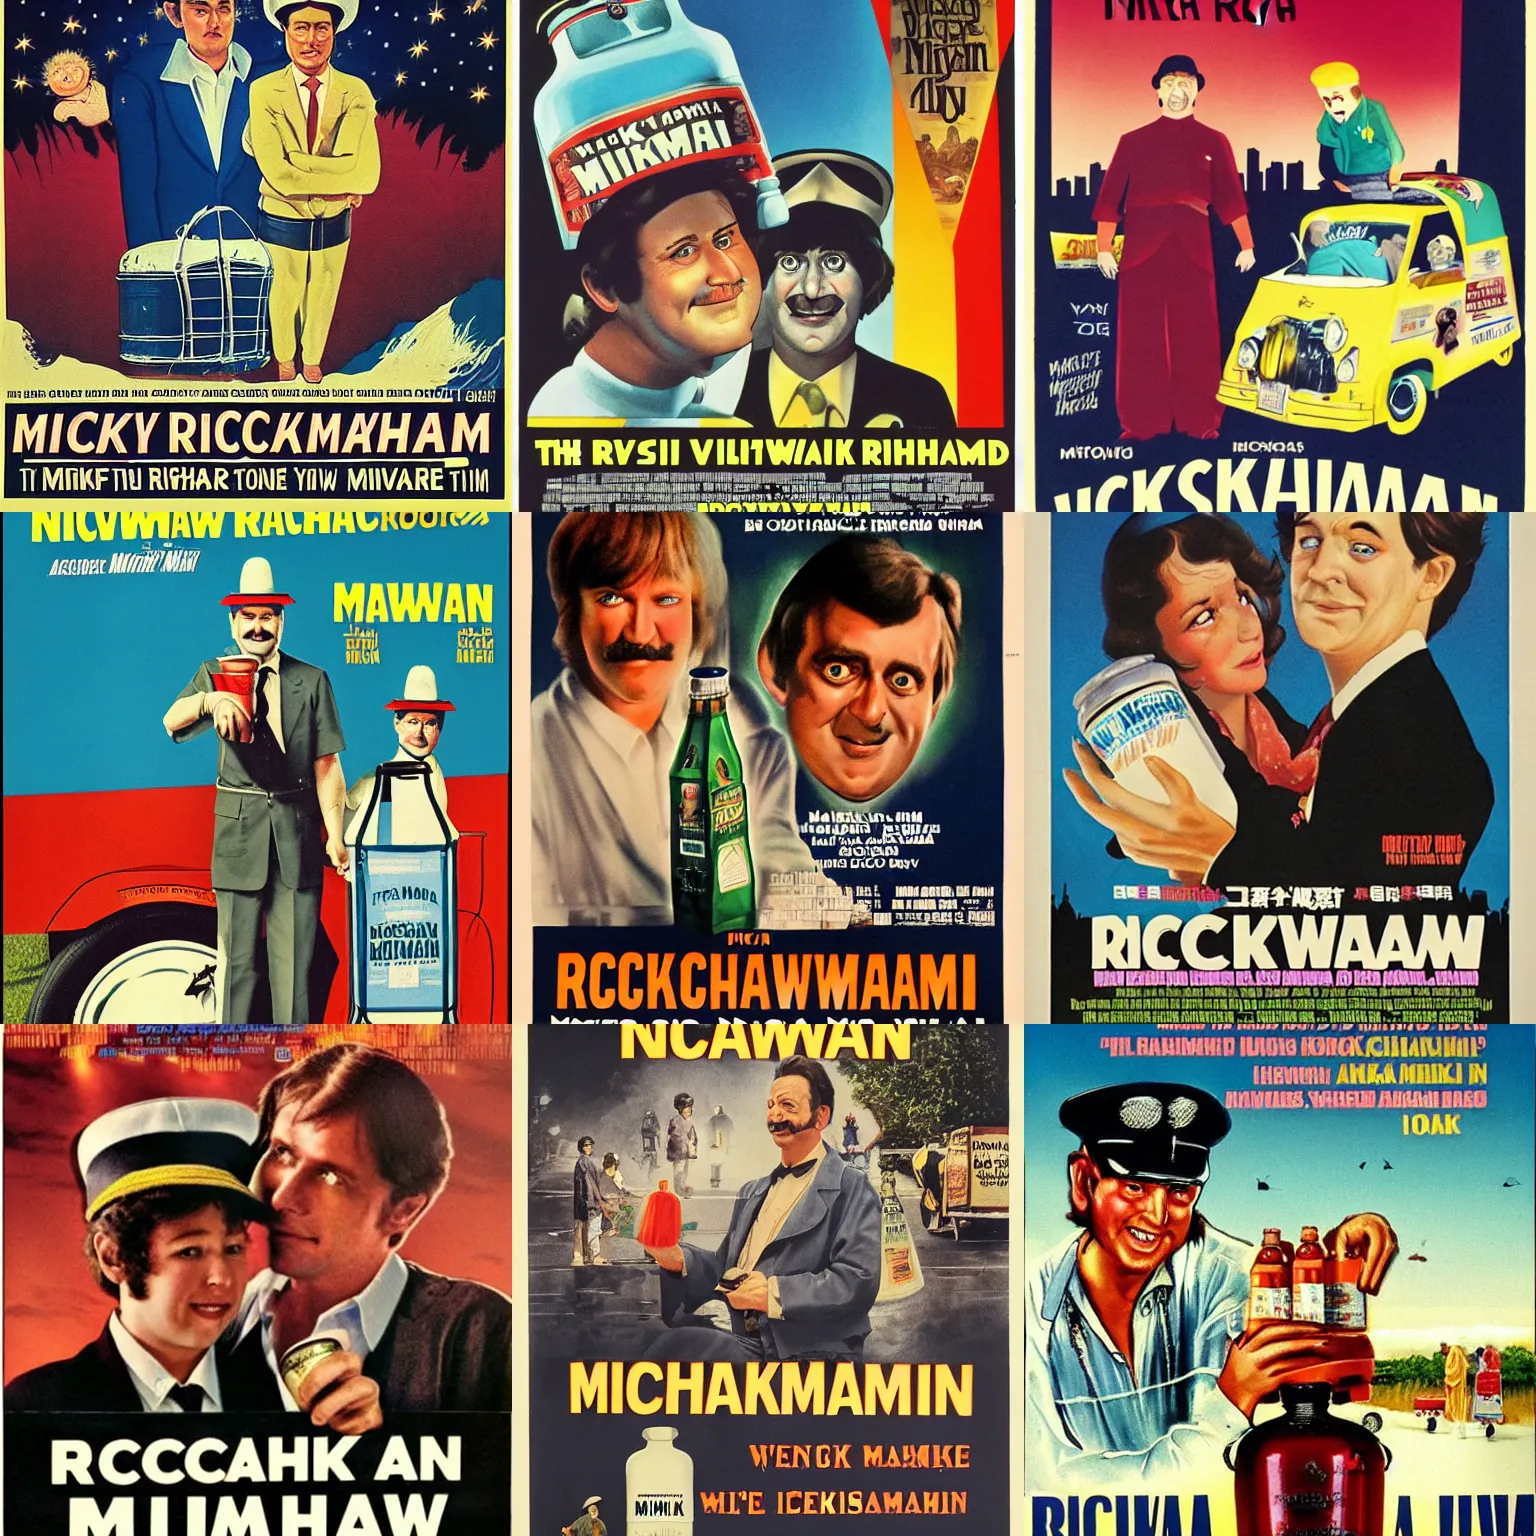 Prompt: Movie Poster for The Rickshaw Milkman Returns (1980)